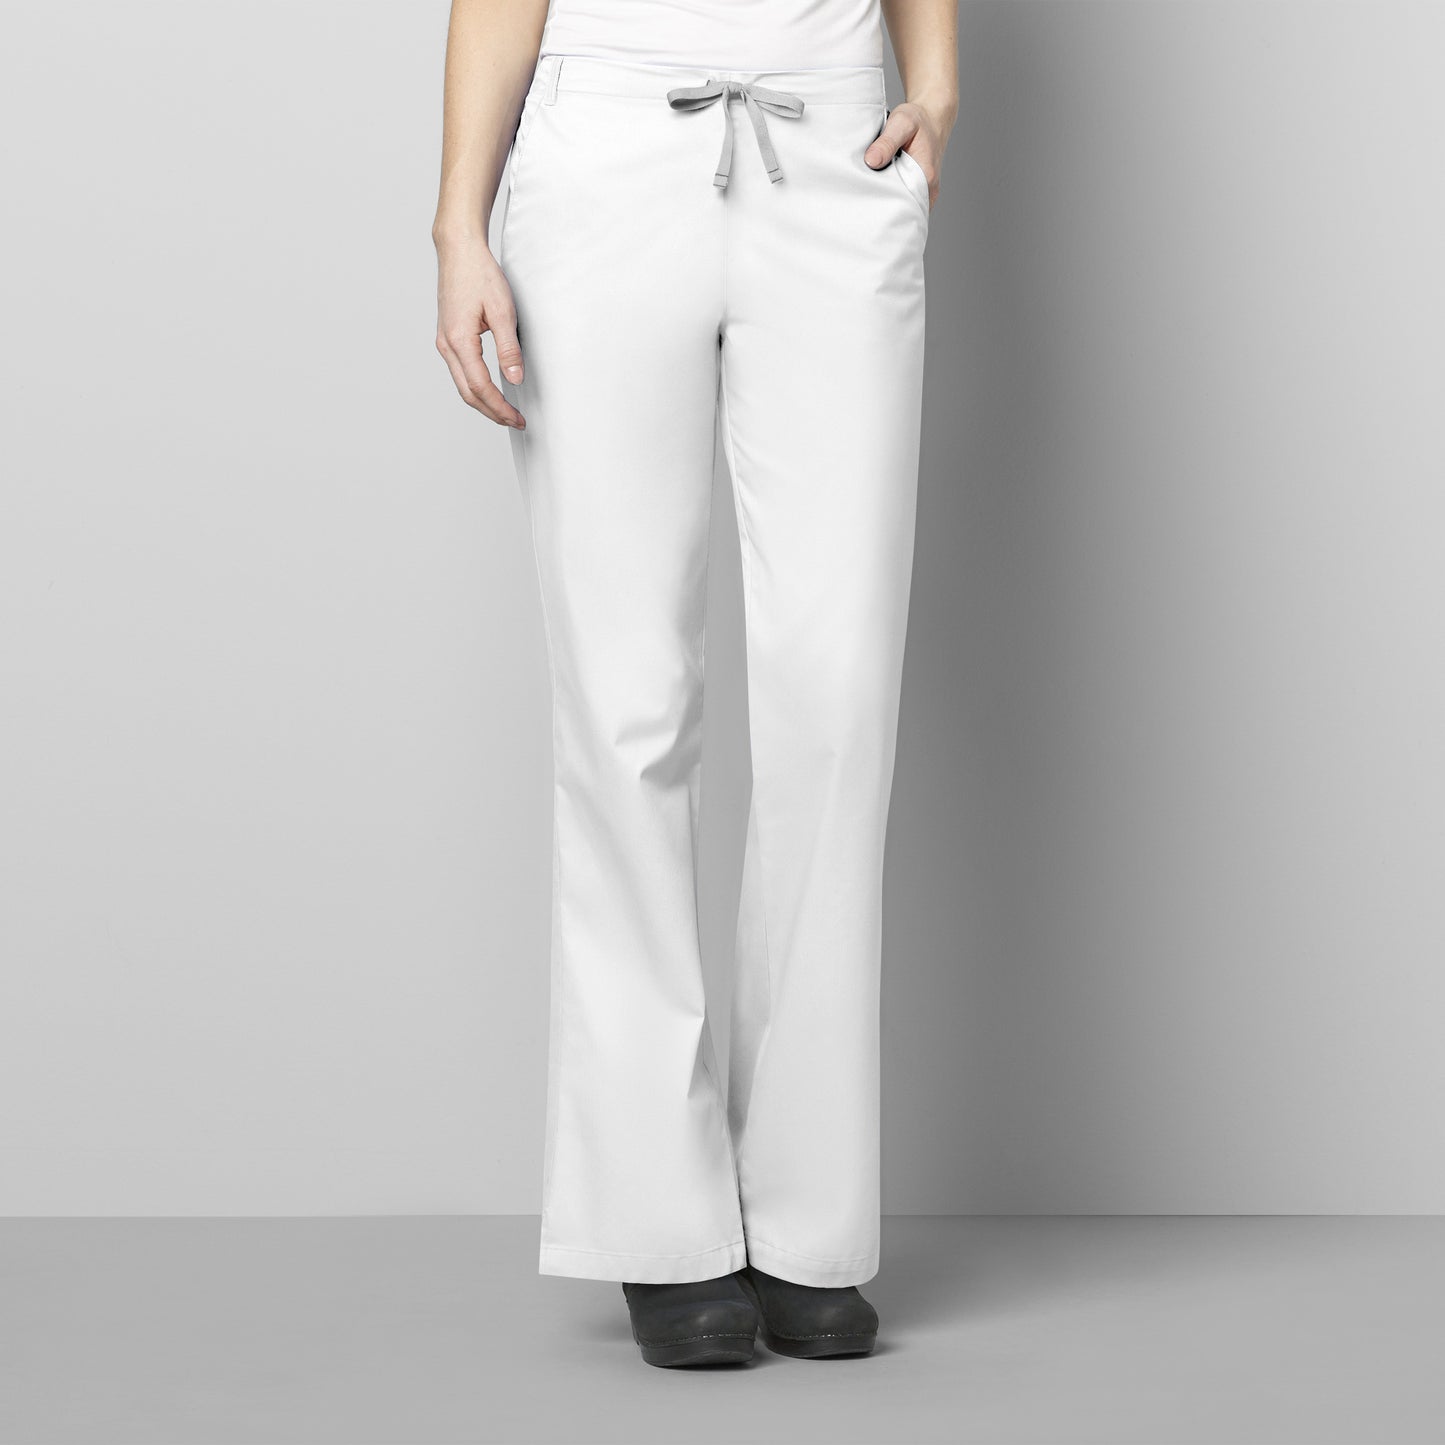 Women's White Flare Pants